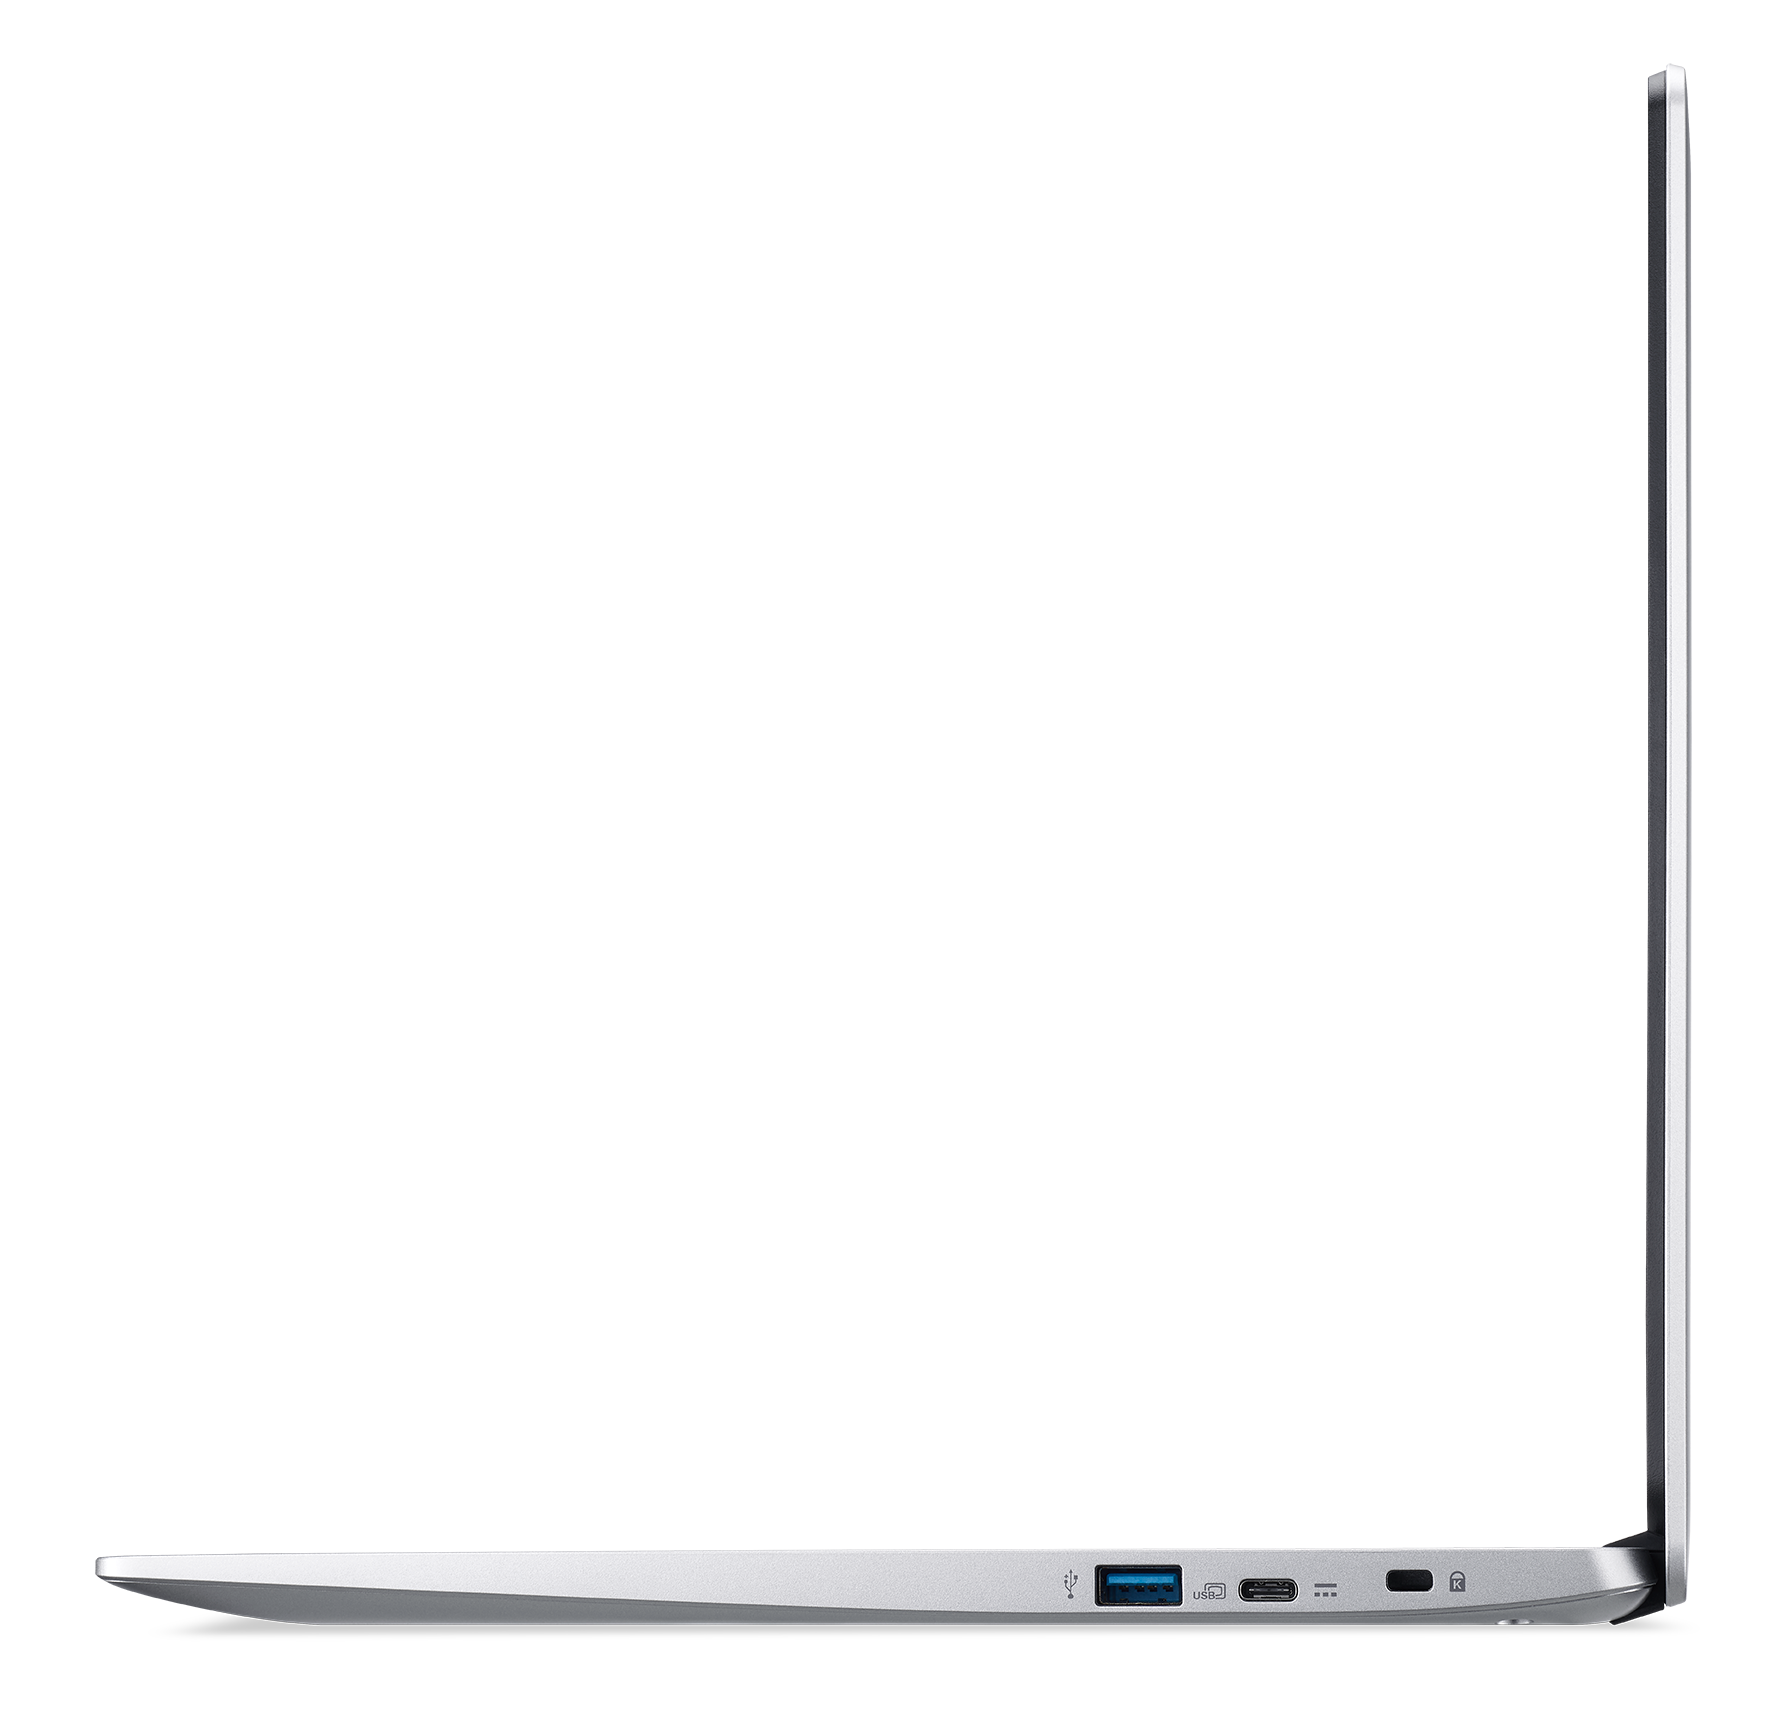 Acer Chromebook 315, 15.6" Full HD 1080p IPS Touchscreen Display, Intel Celeron N4020, 4GB LPDDR4, 64GB eMMC, CB315-3HT-C6XF (Google Classroom Ready) - image 3 of 8